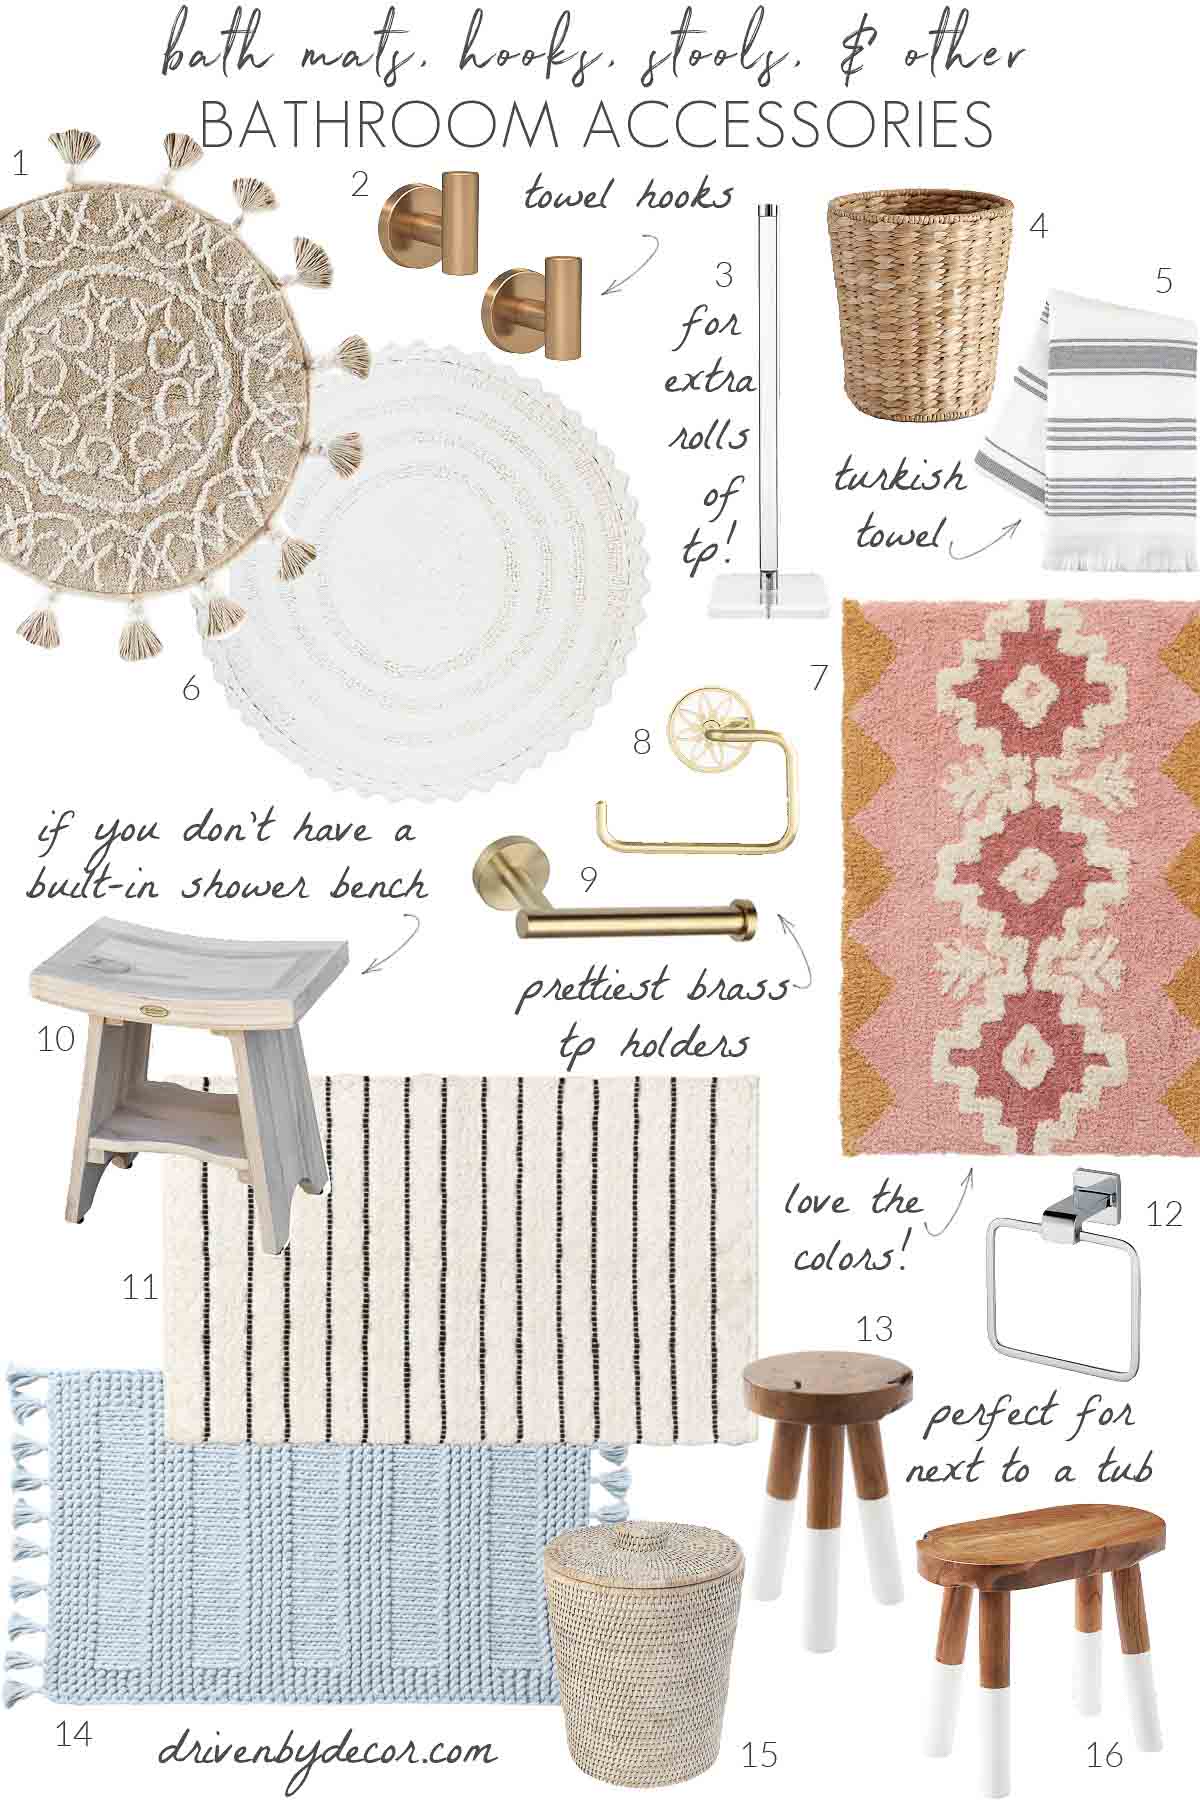 Bathroom decor ideas - stools, mats, and more!